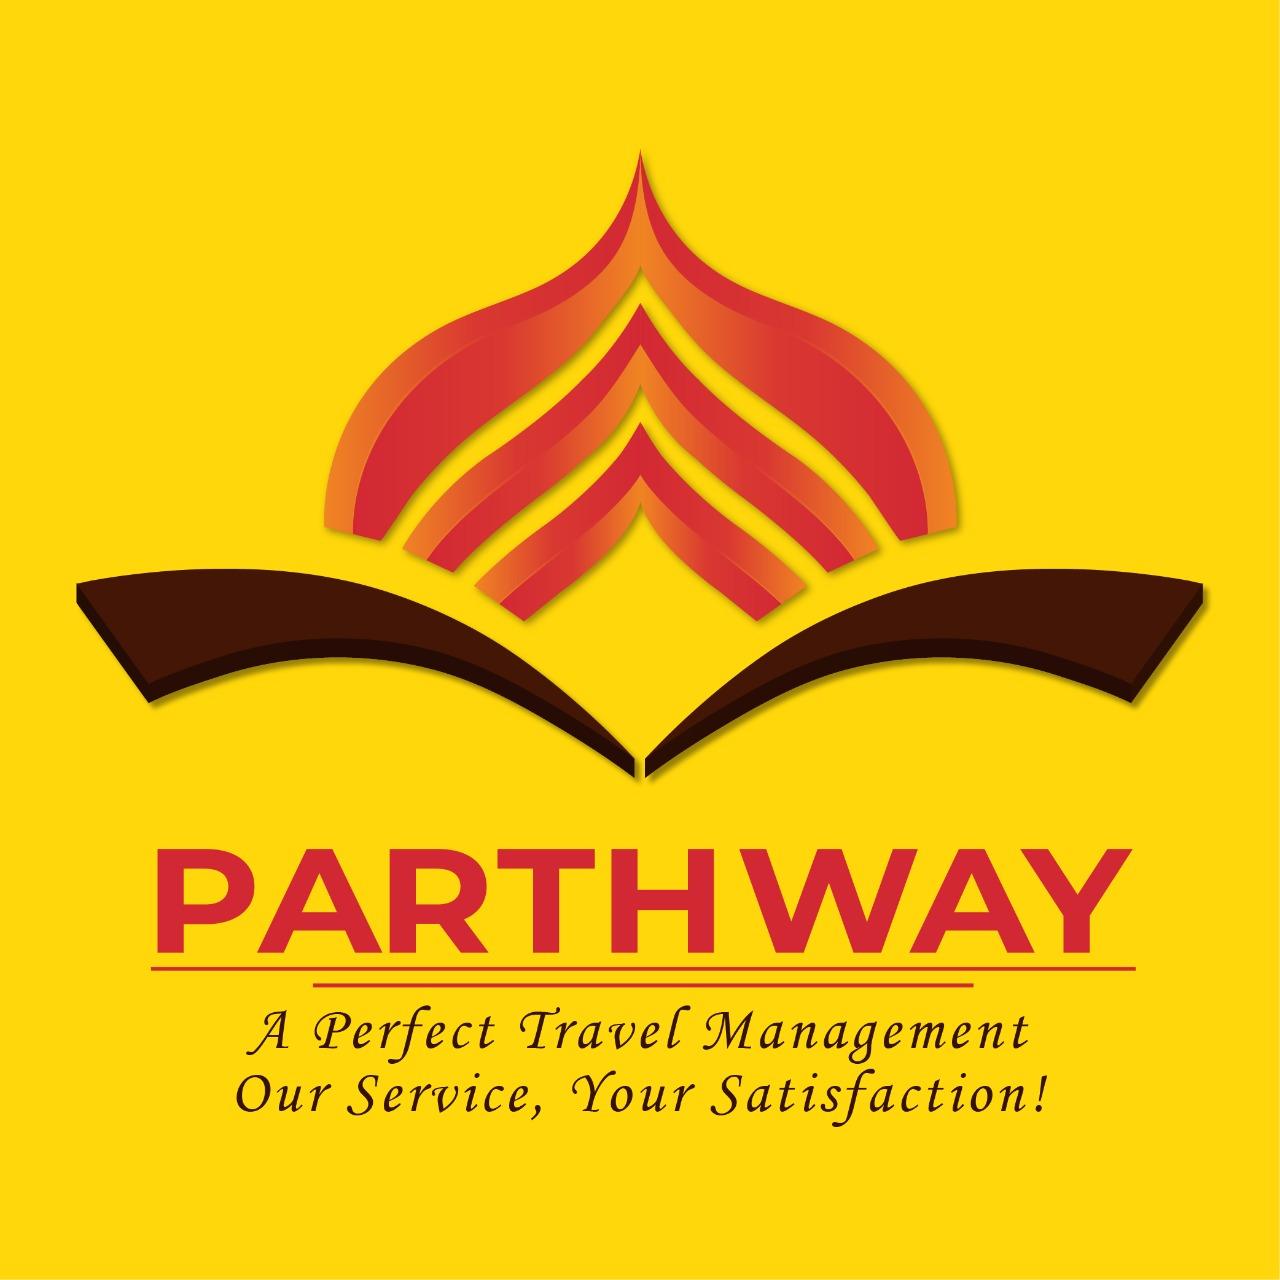 parthway logo